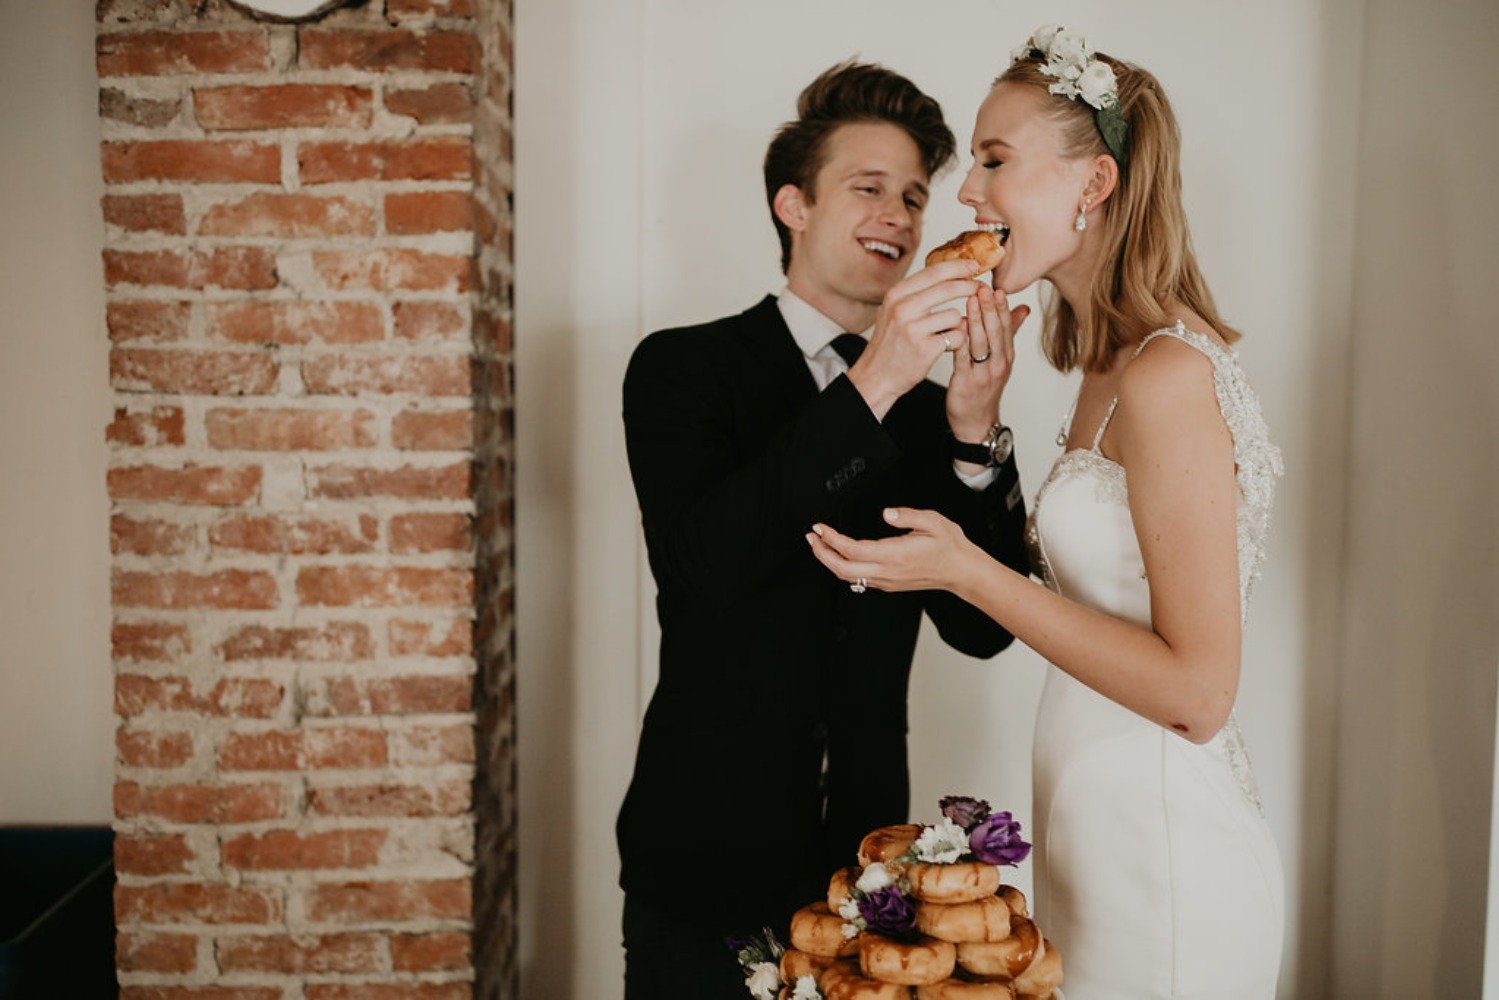 wedding donuts